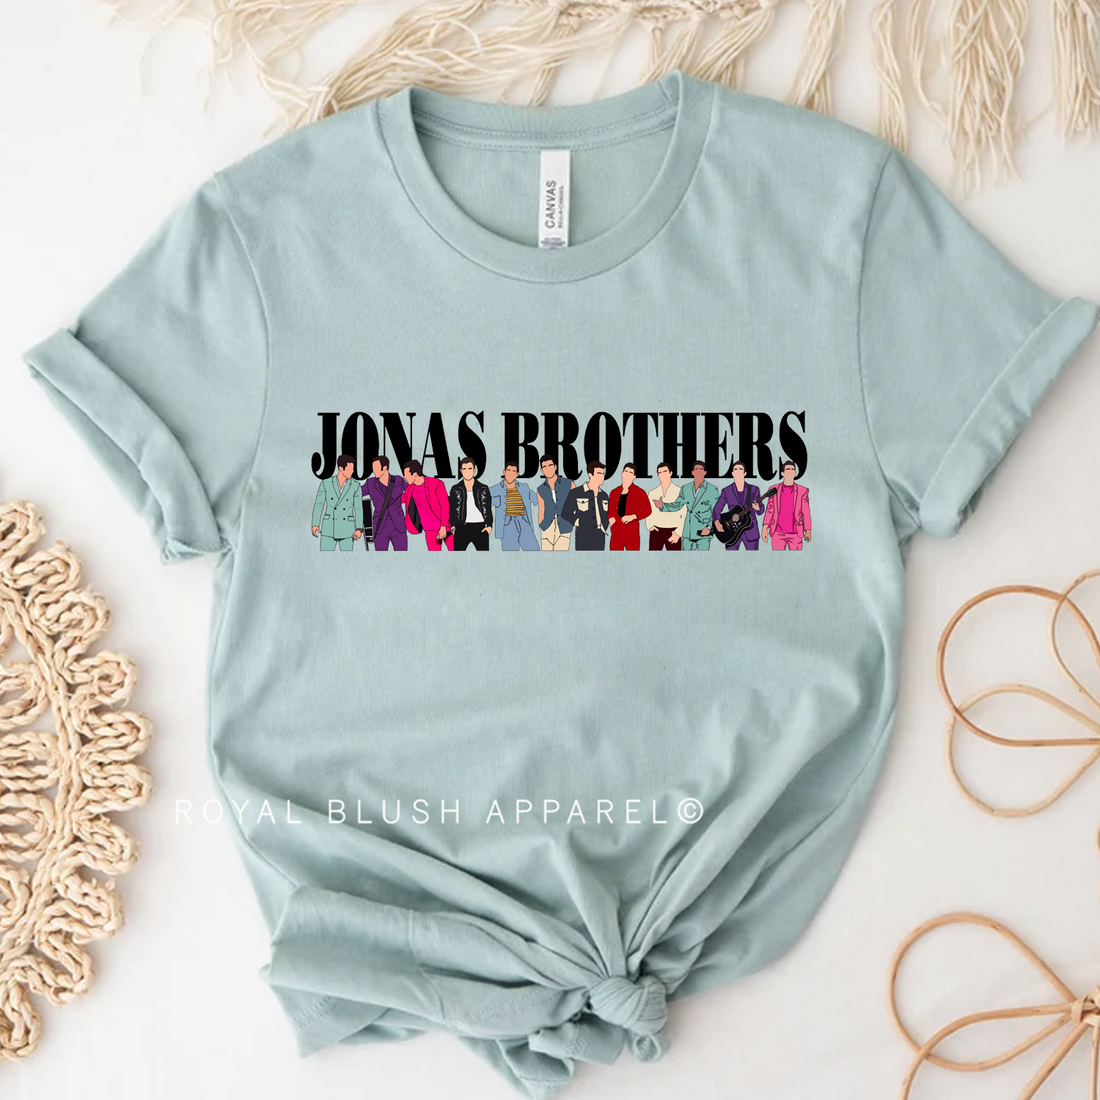 Jonas Brothers T-shirt unisexe décontracté